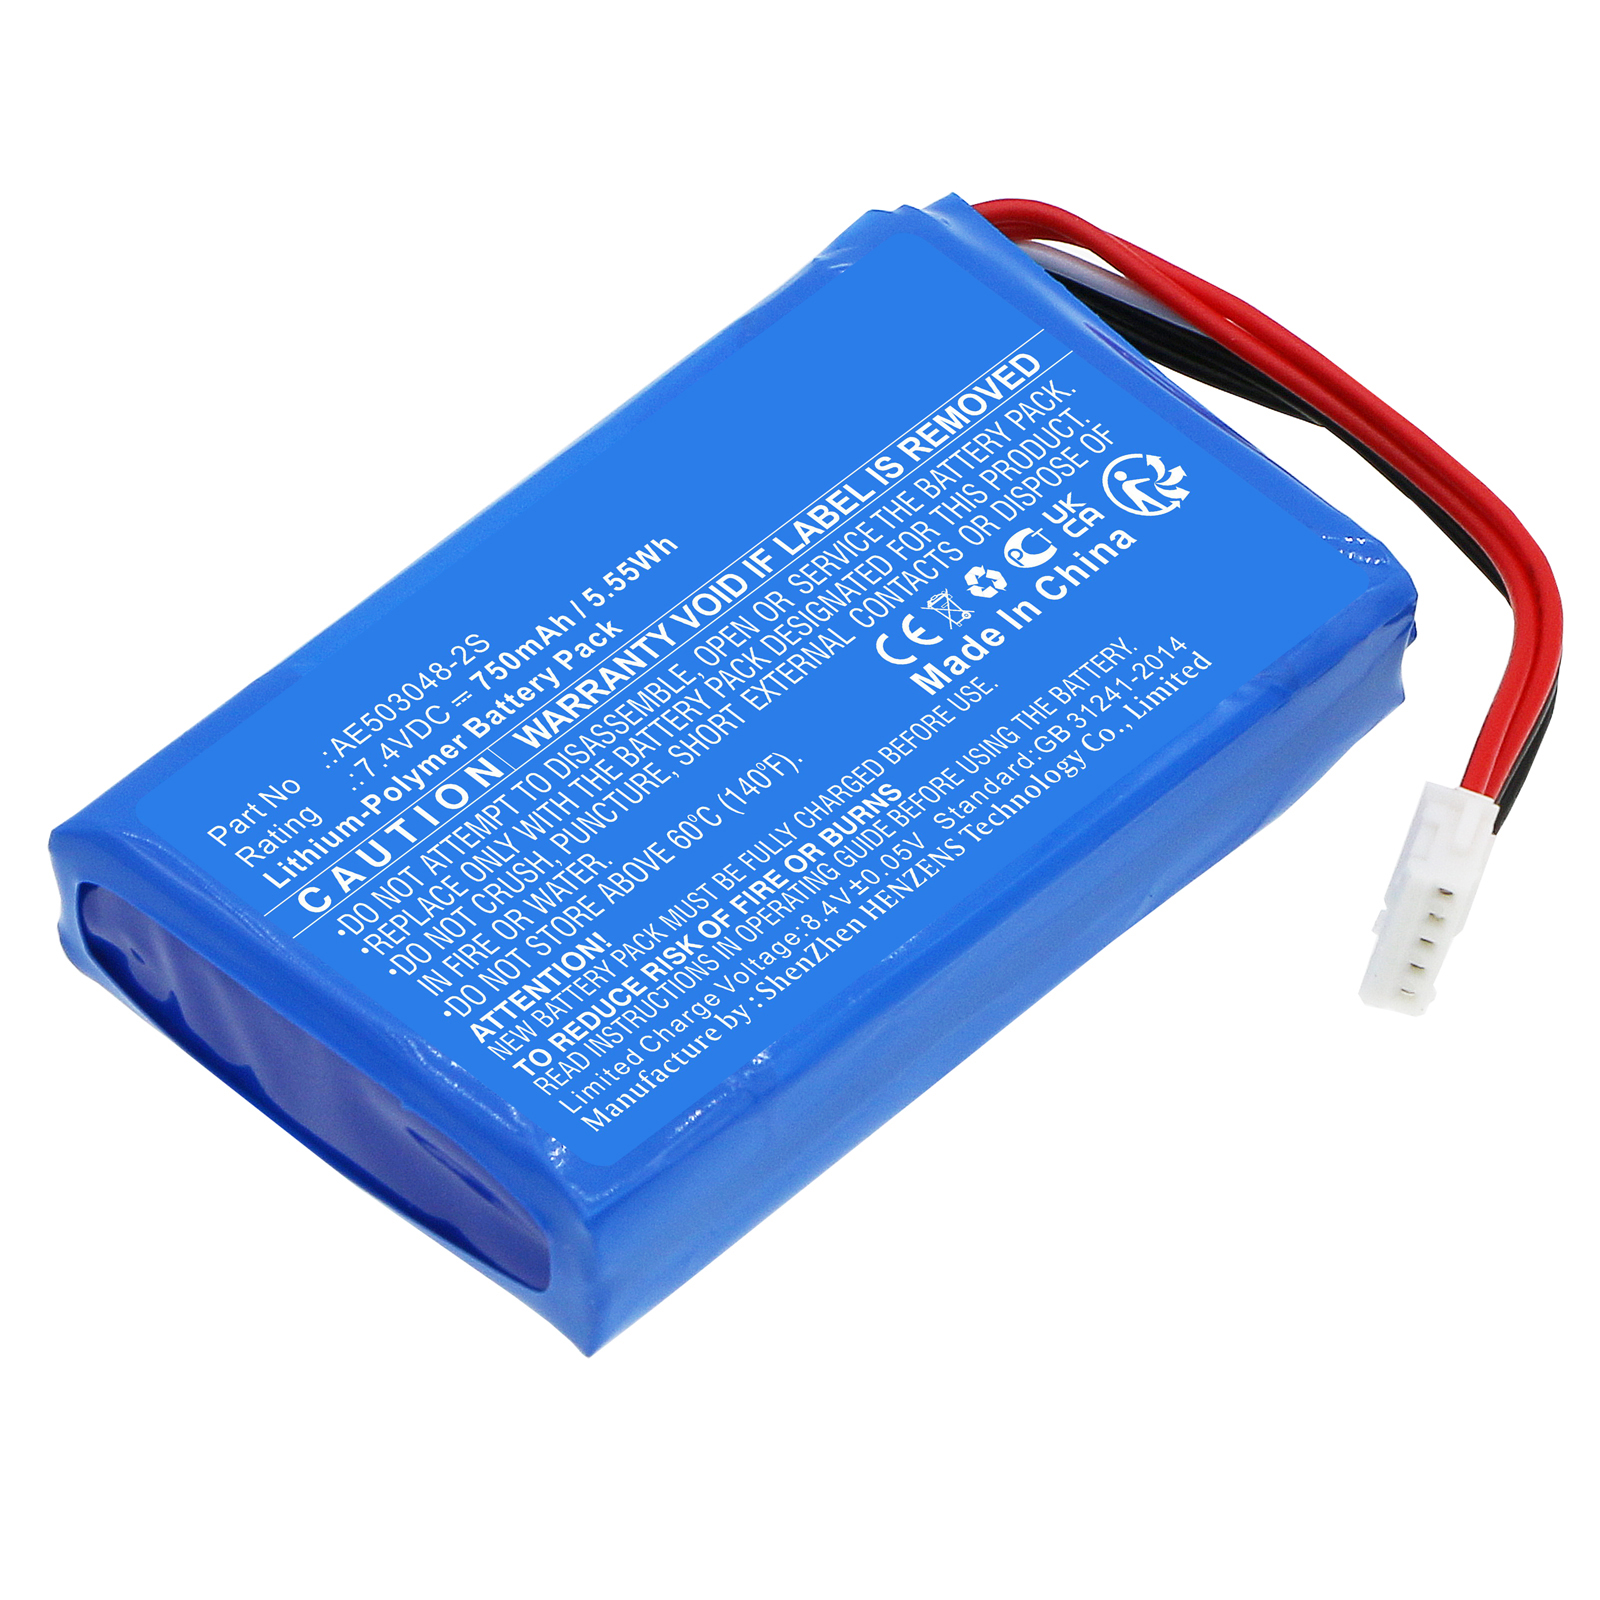 Synergy Digital Printer Battery, Compatible with Polaroid AE503048-2S Printer Battery (Li-Pol, 7.4V, 750mAh)